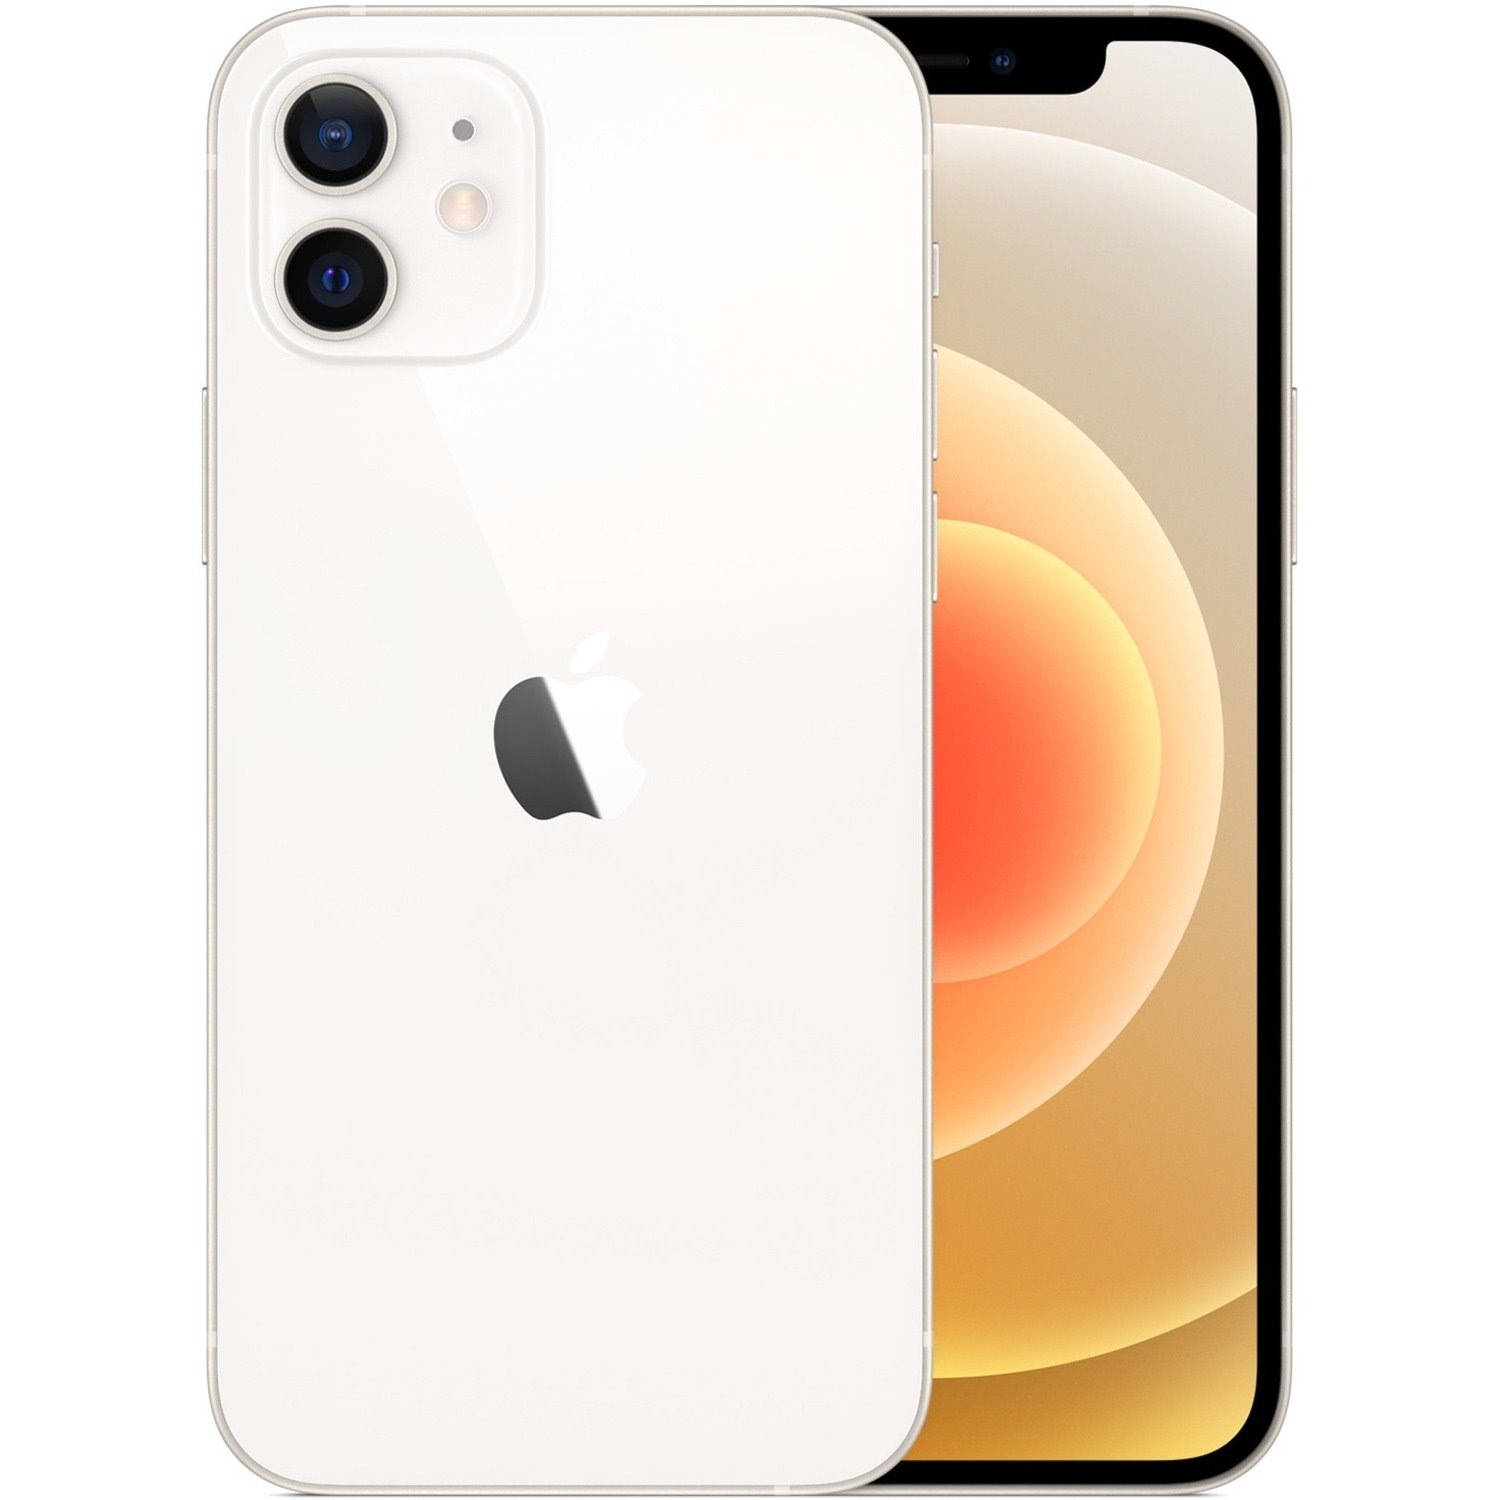 Apple iPhone 12 mini 64 GB Smartphone - 13.7 cm (5.4") OLED Full HD Plus 2340 x 1080 - Hexa-core (6 Core) - iOS 14 - 5G - White